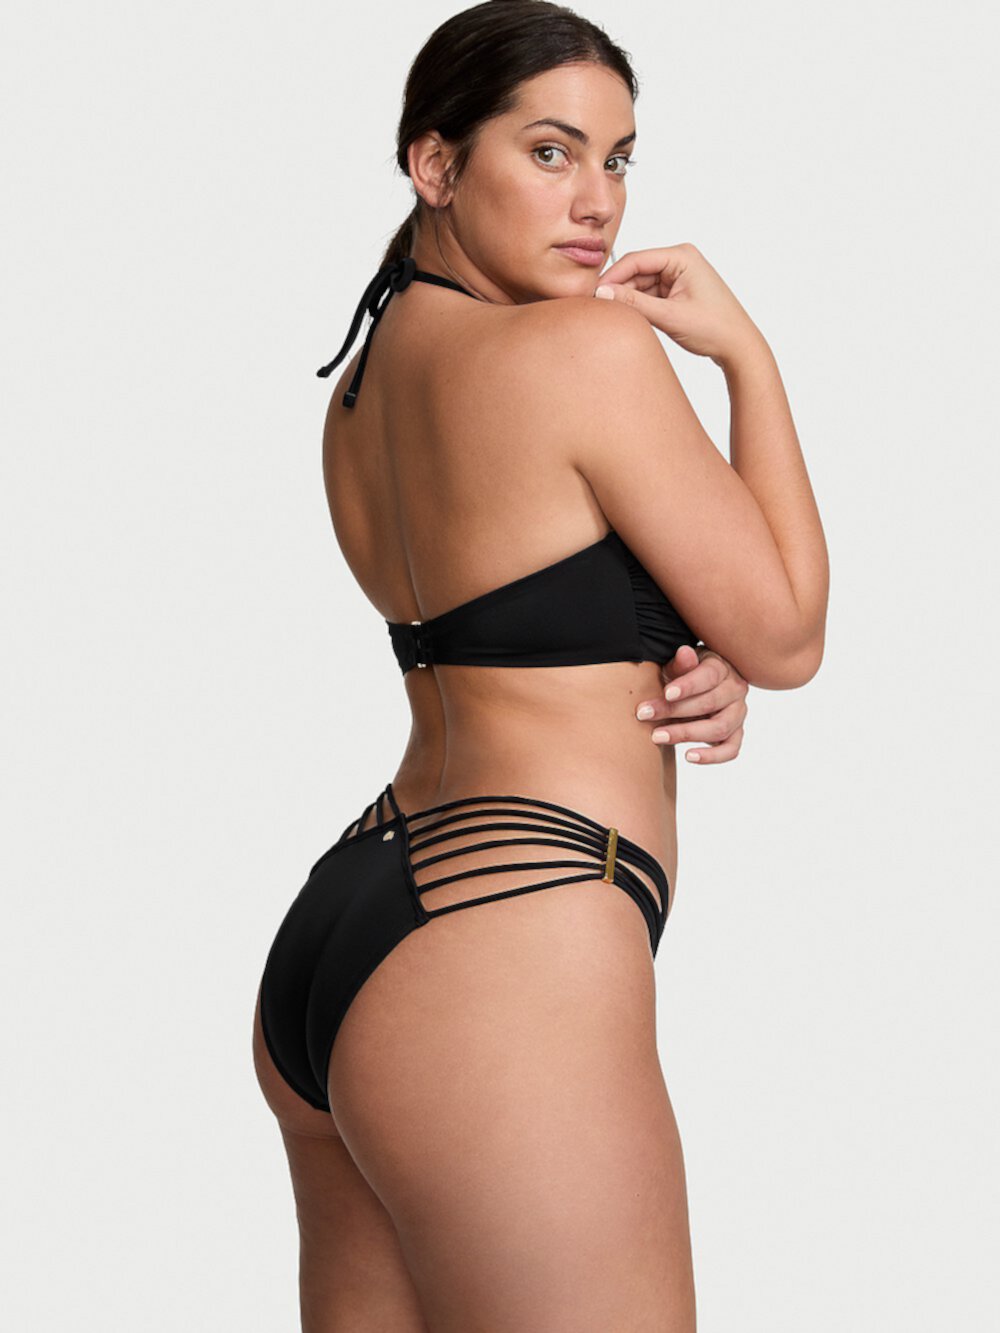 New Style! VS Archives Swim Strappy Hardware Brazilian Bikini Bottom Victoria's Secret Swim